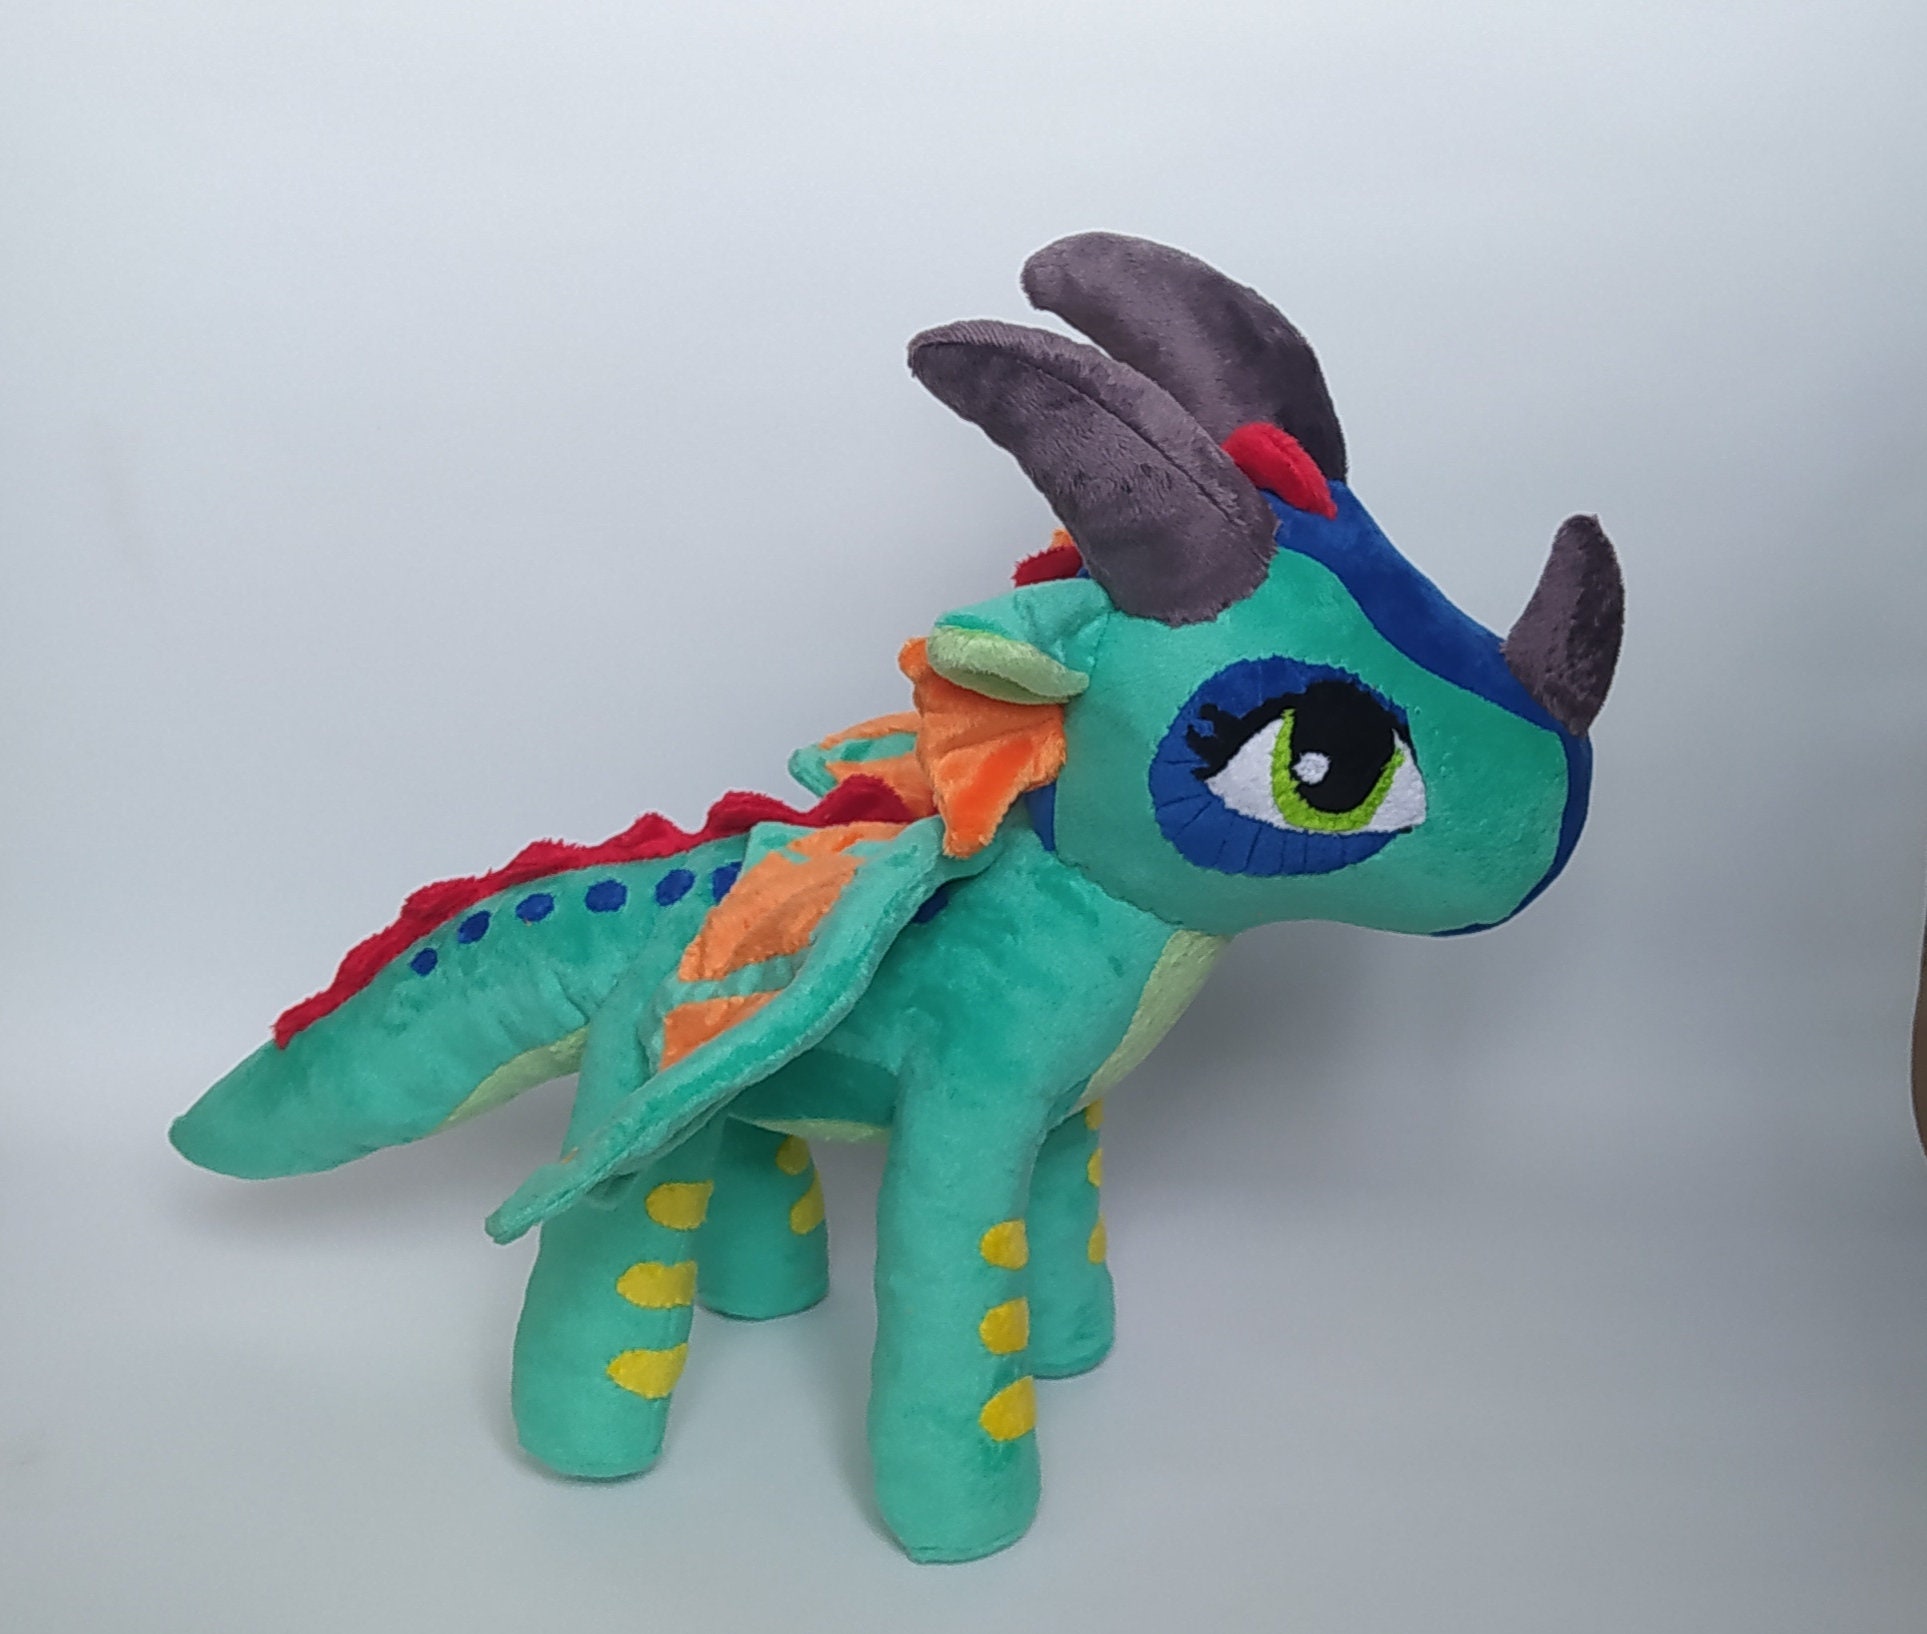 CHAOZI0Evil Winged, fire-Breathing Dragon Stuffed Animal Dinosaur Plush  firedragon Toys, Throw Pillow, Role-Playing Game Fan Props (Orange Yellow)